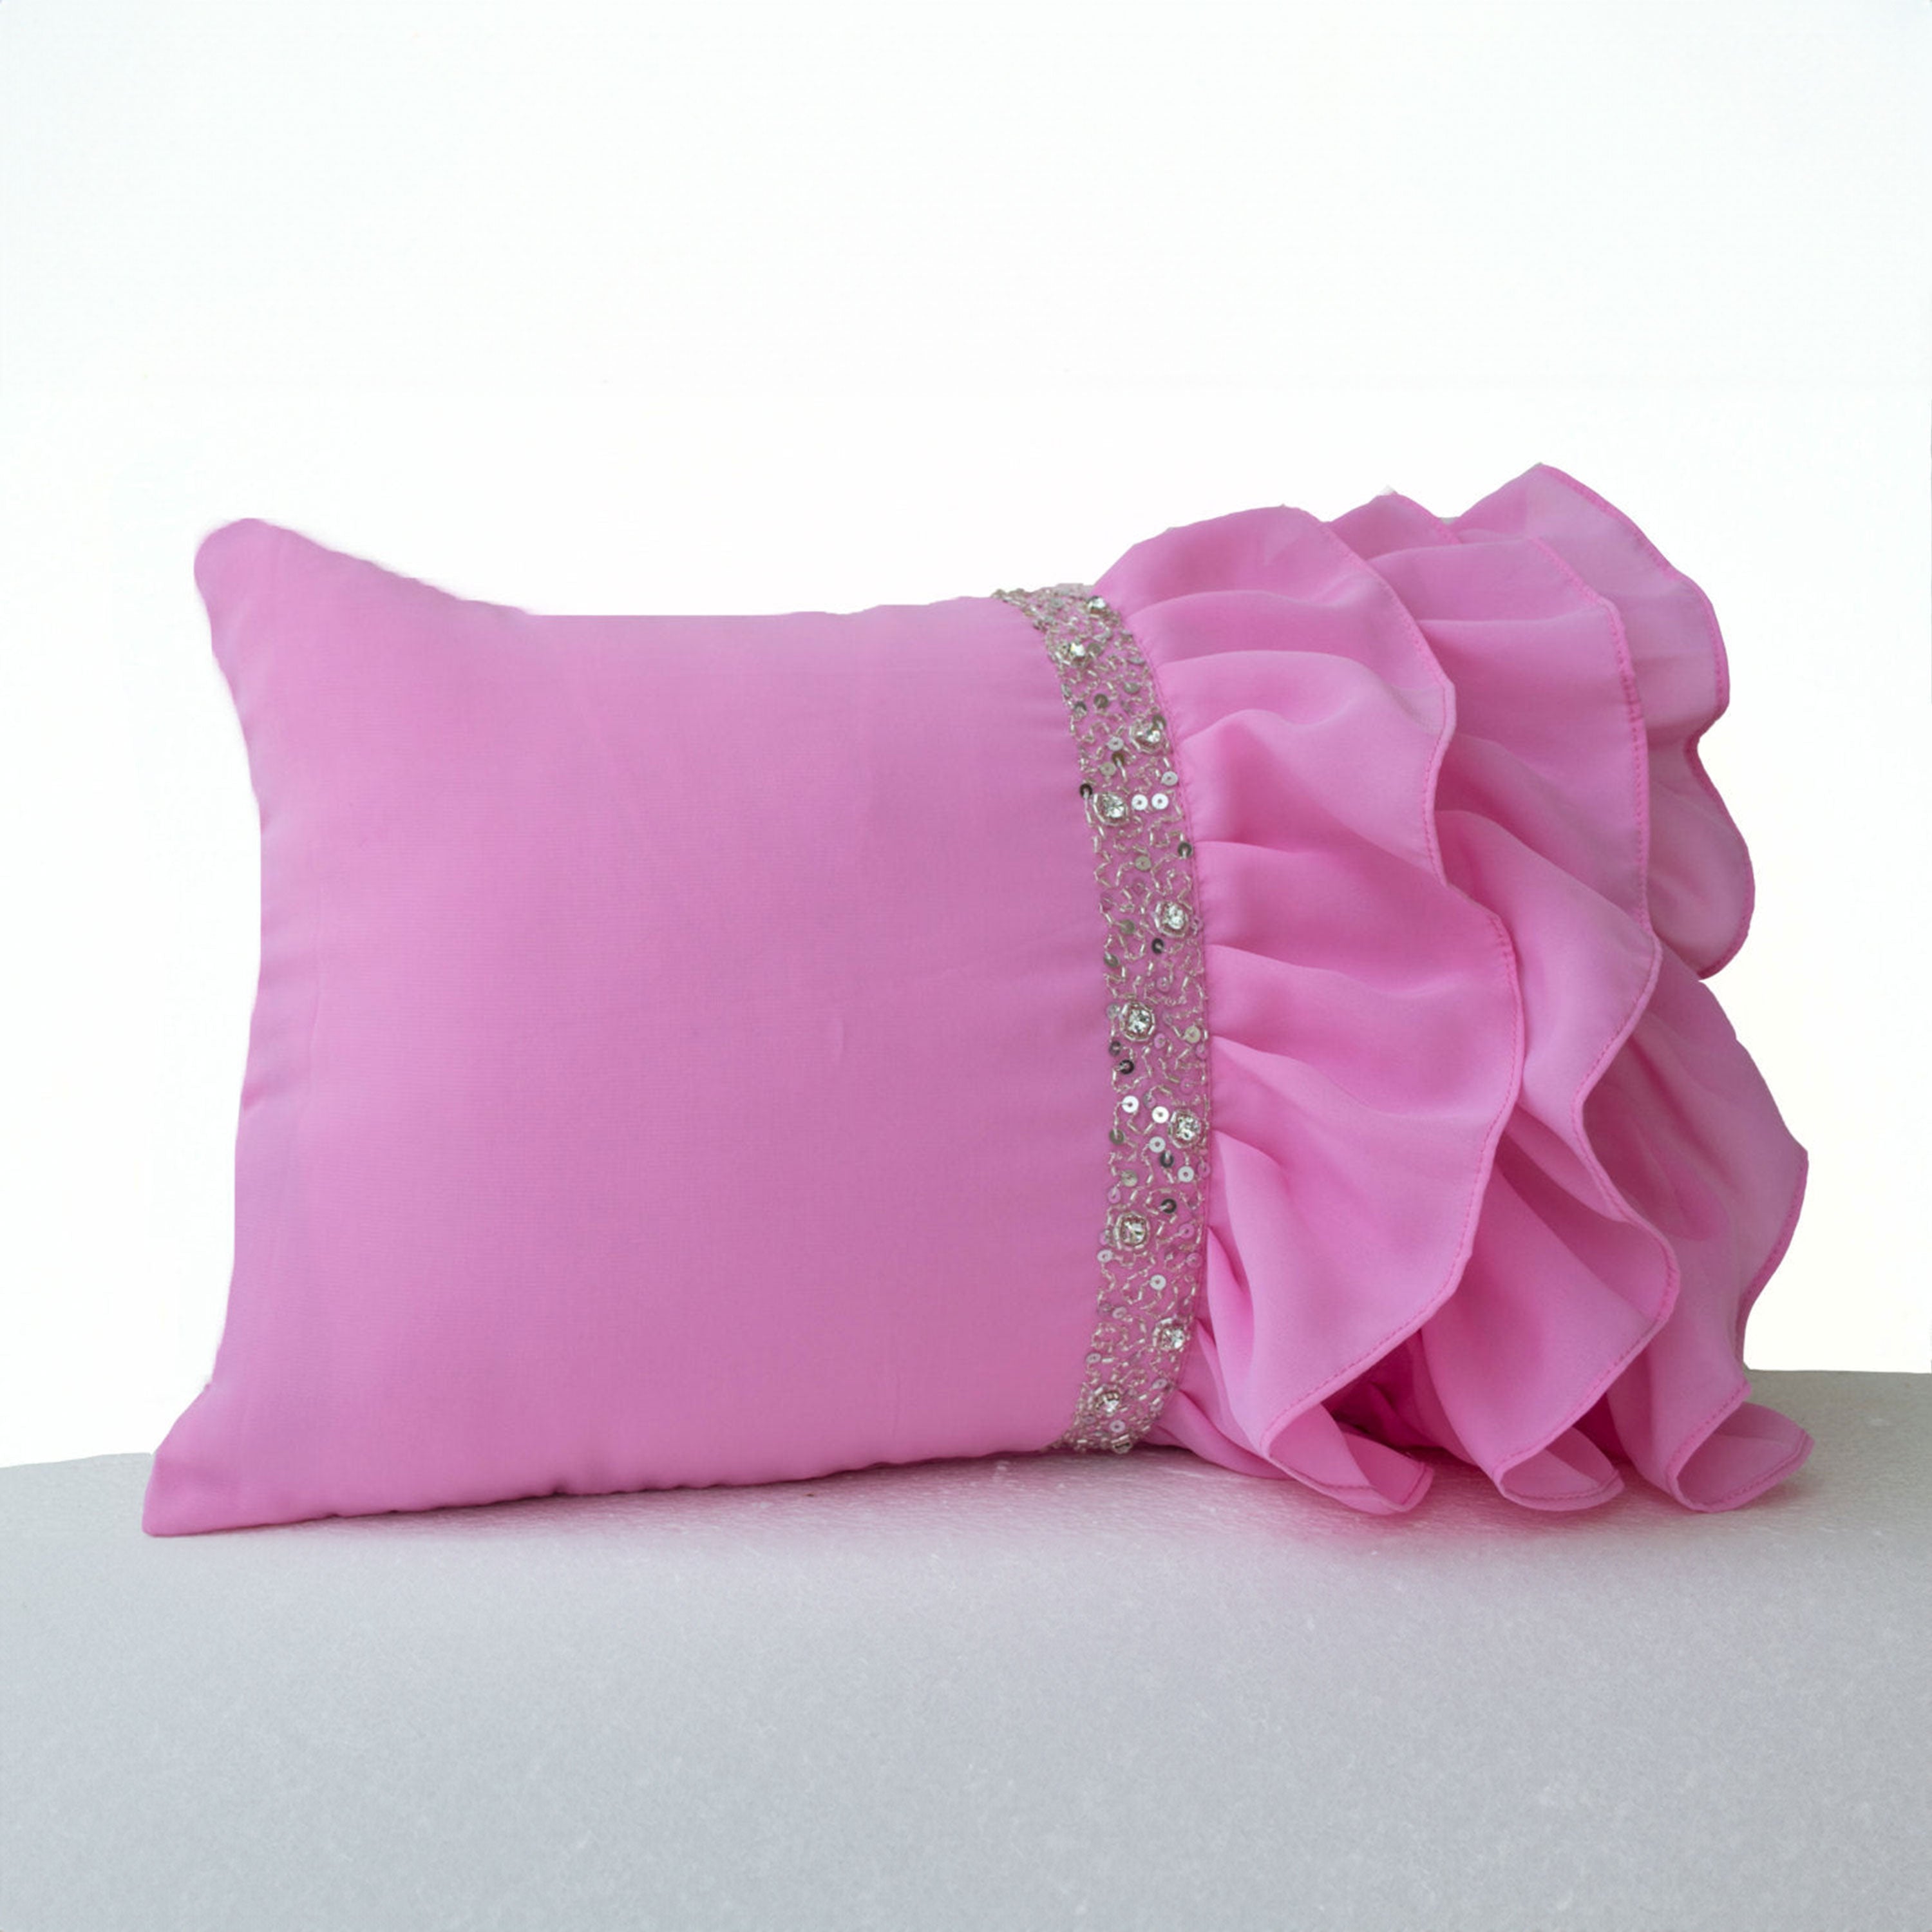 Pink ruffled pillow, Georgette Ruffle pillow covers, Pink Lumbar Pillow